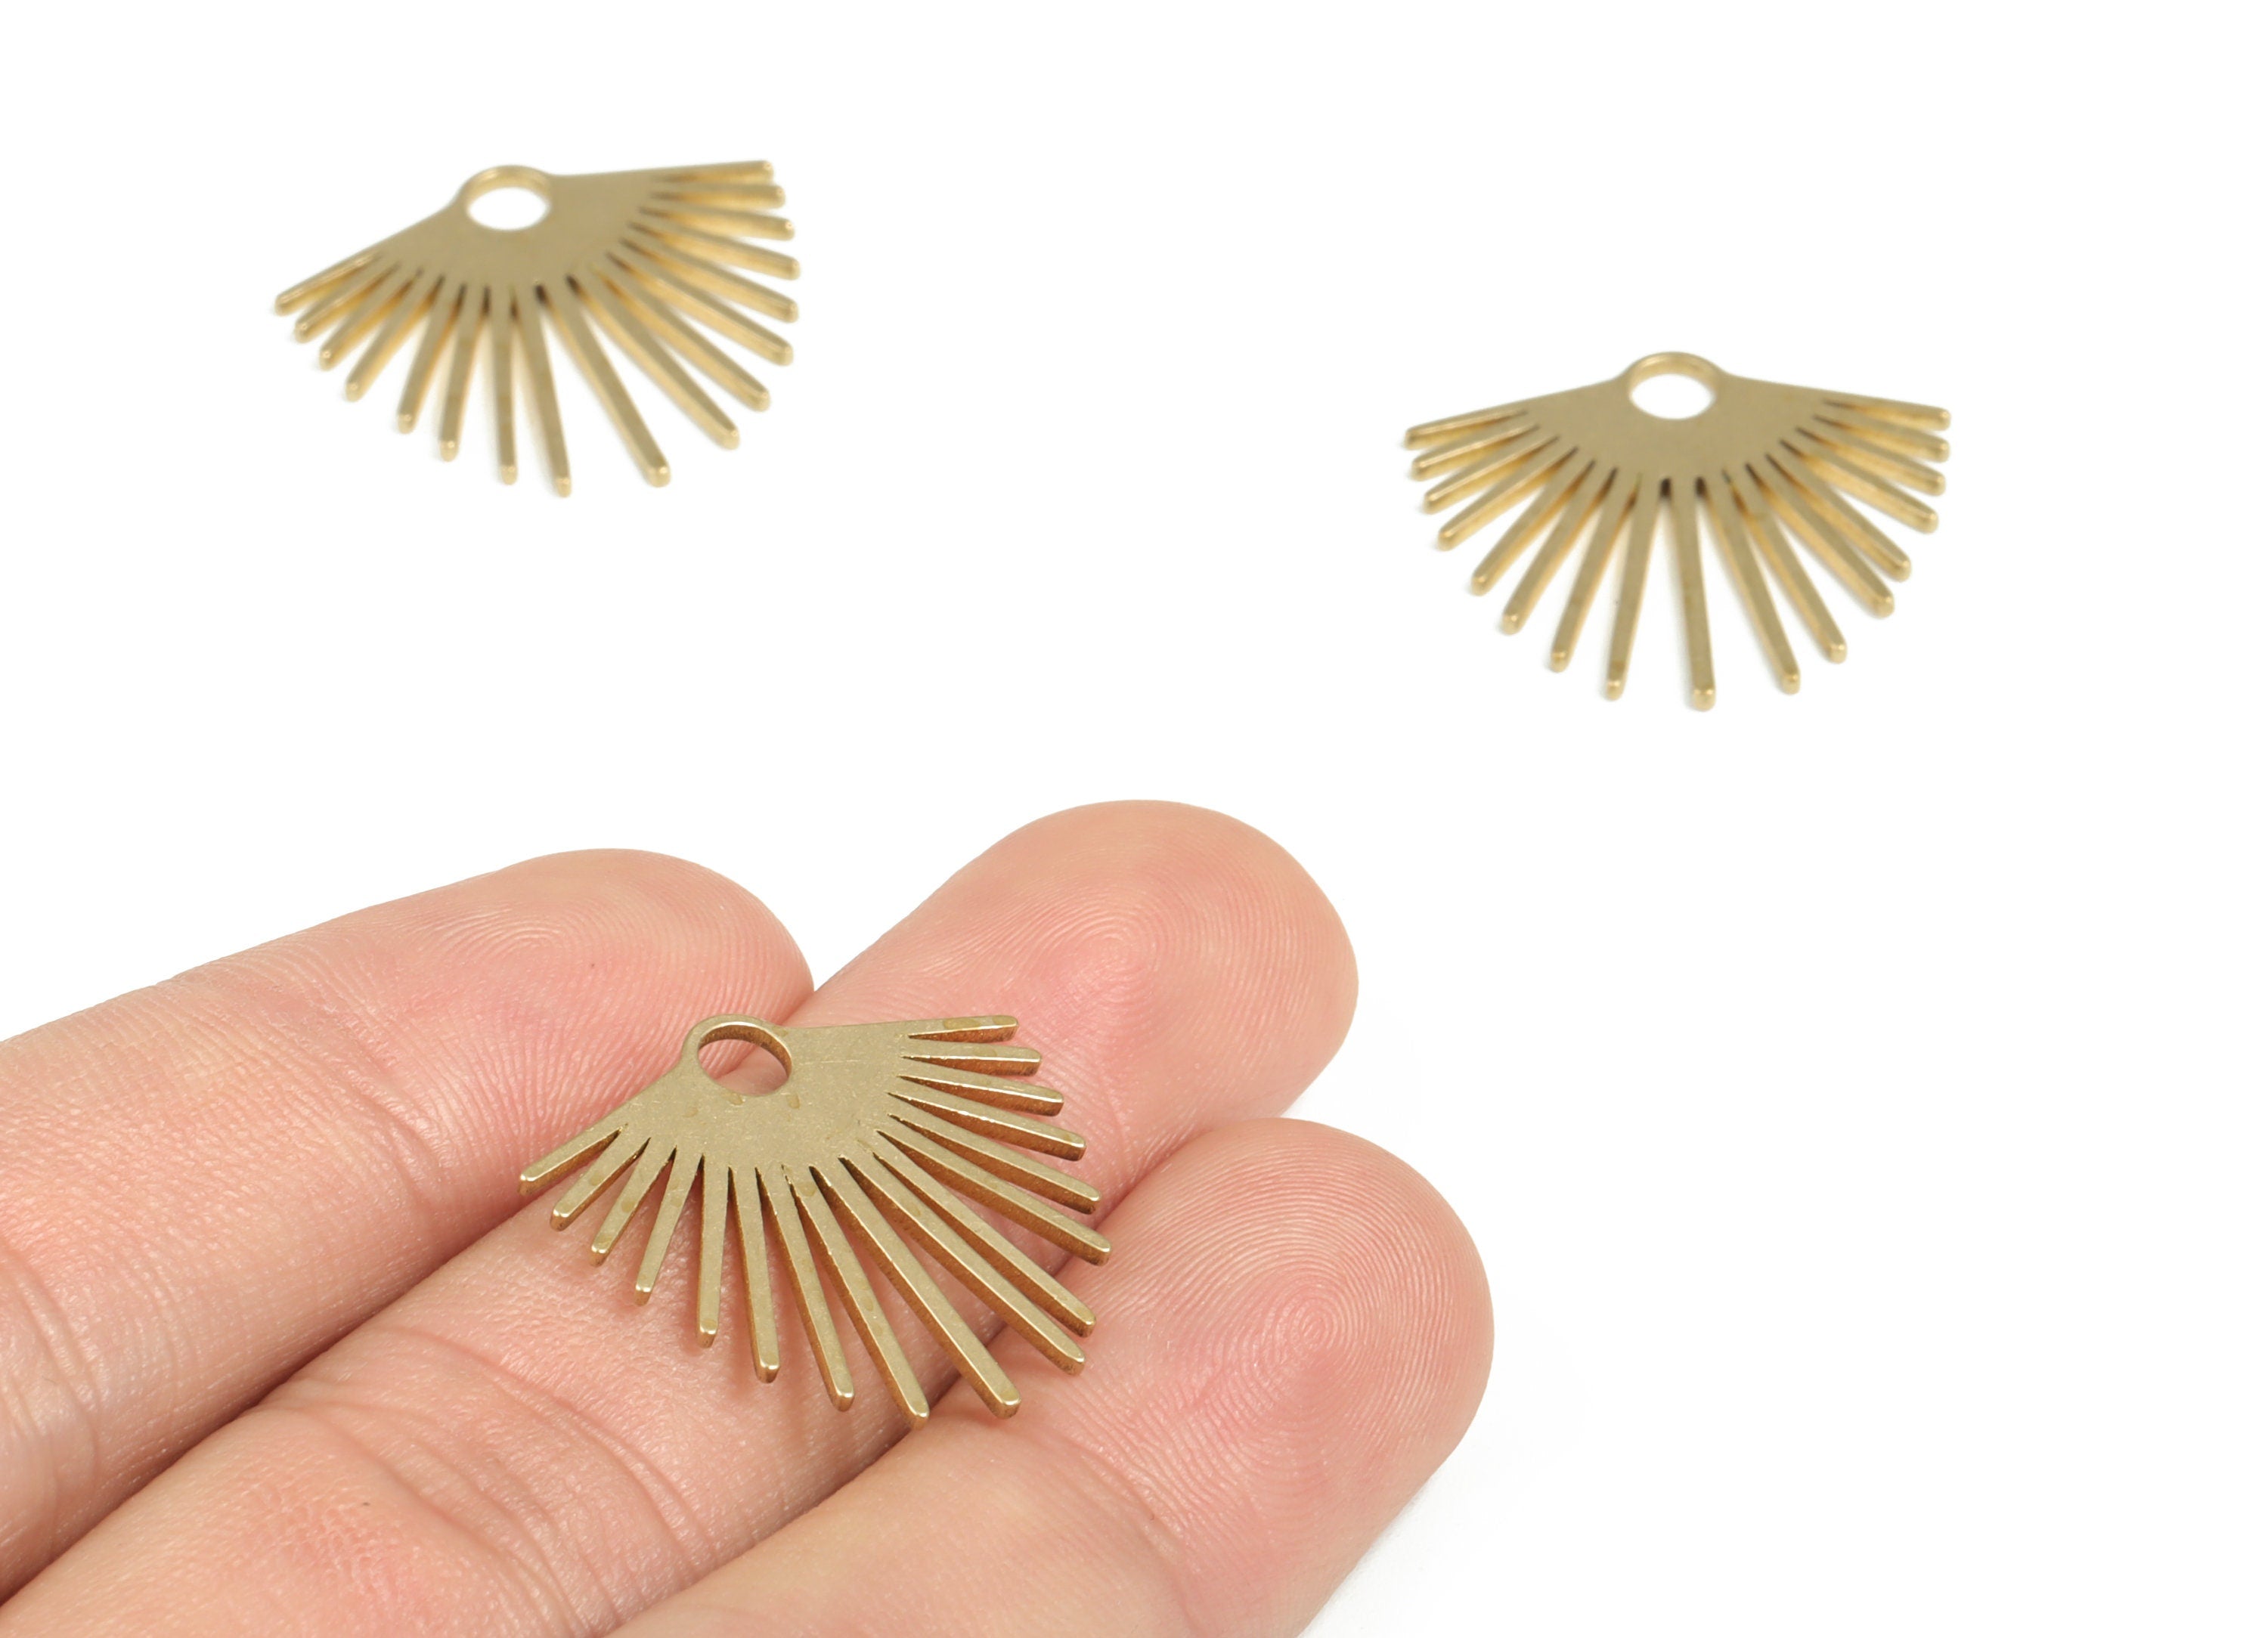 Brass Charms, Raw Brass Earring Findings. Earring Finds. Wholesale